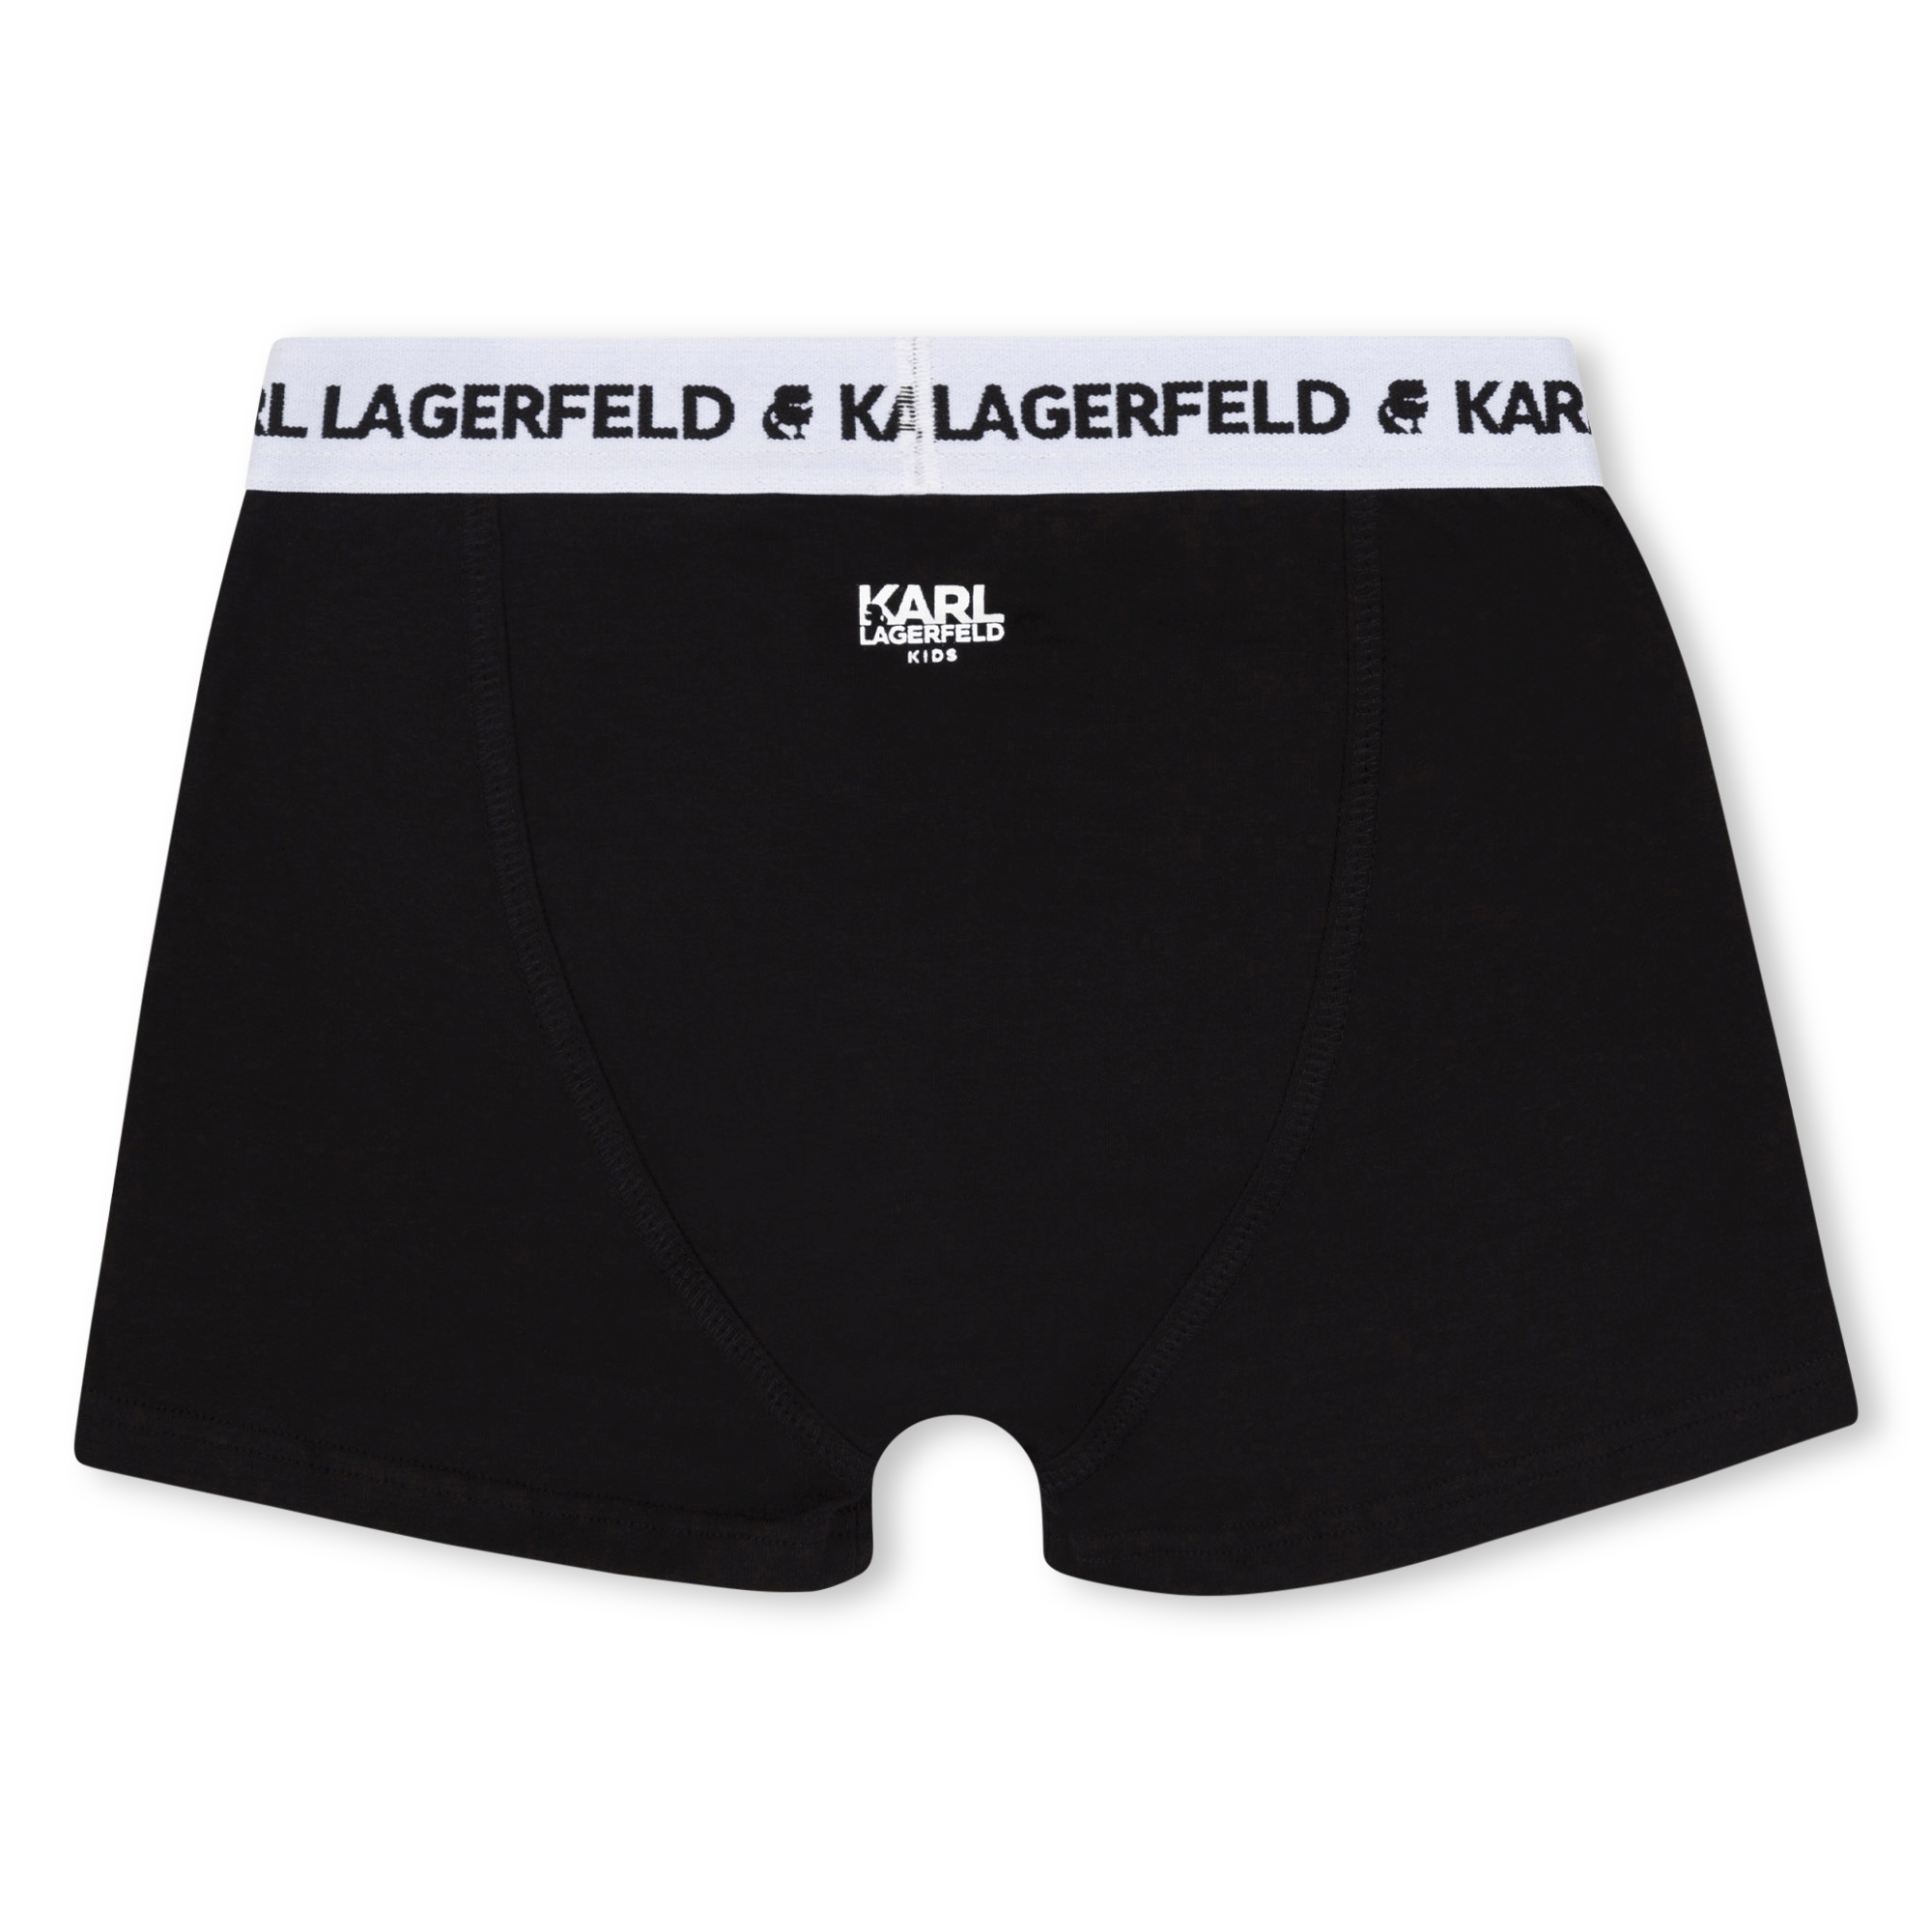 Set of 2 cotton boxer shorts KARL LAGERFELD KIDS for BOY